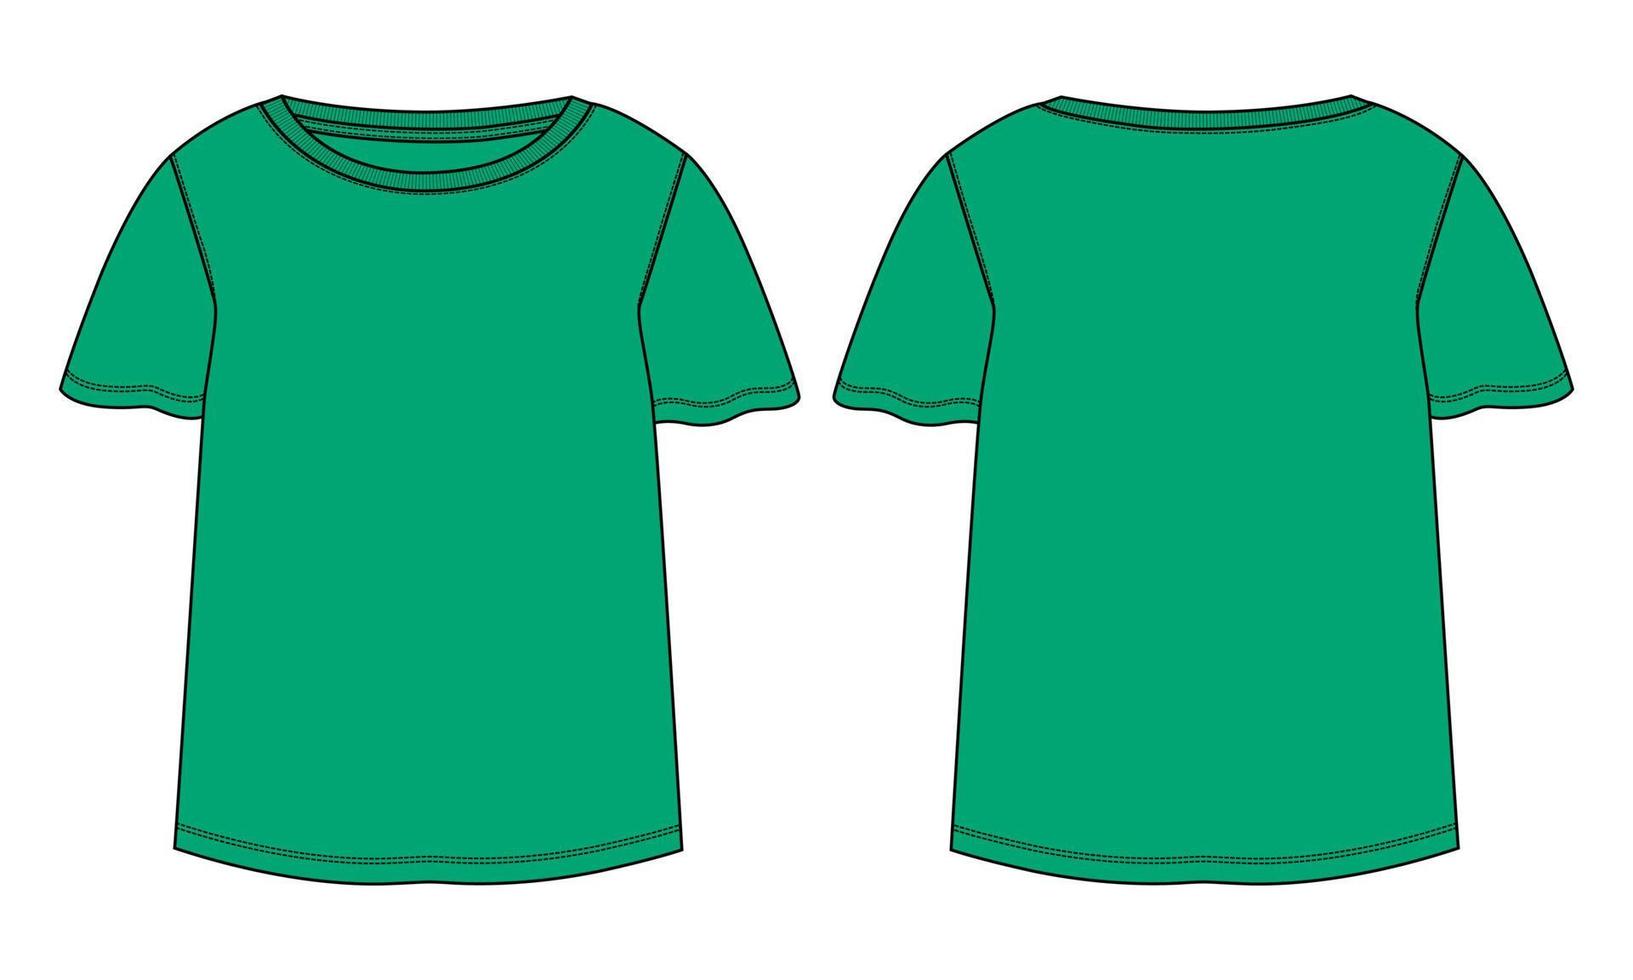 camiseta tops modelo de desenho plano de moda técnica vetor verde modelo de cor para senhoras e bebés